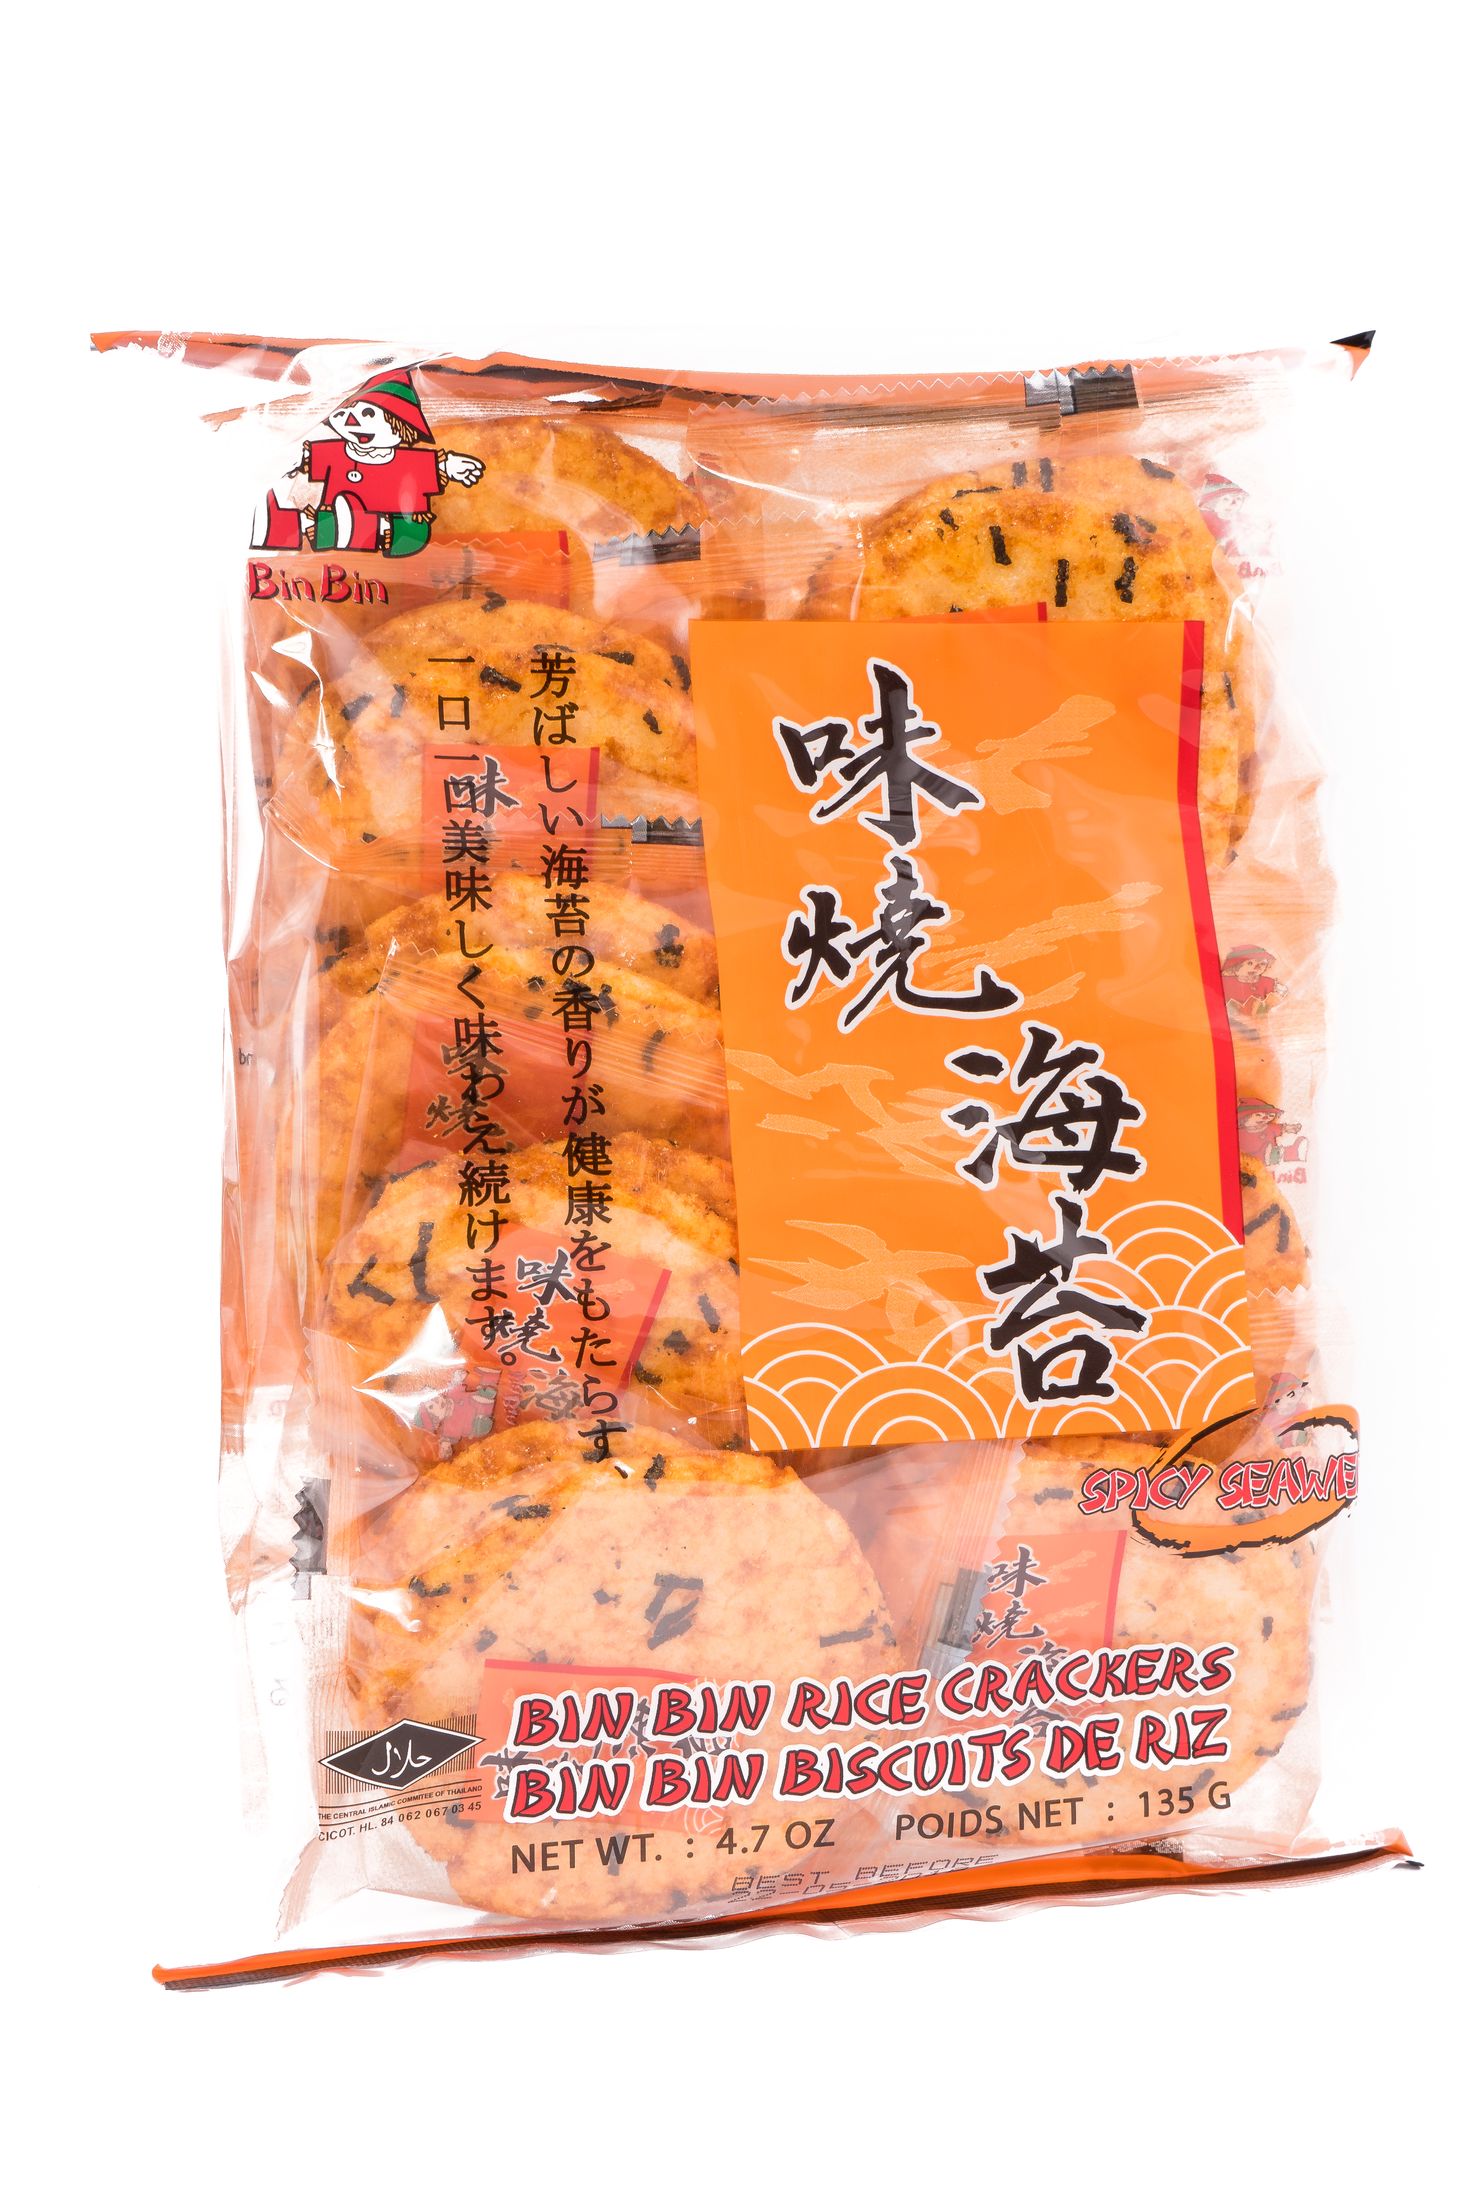 Bin Bin Spicy rice crackers with seaweed